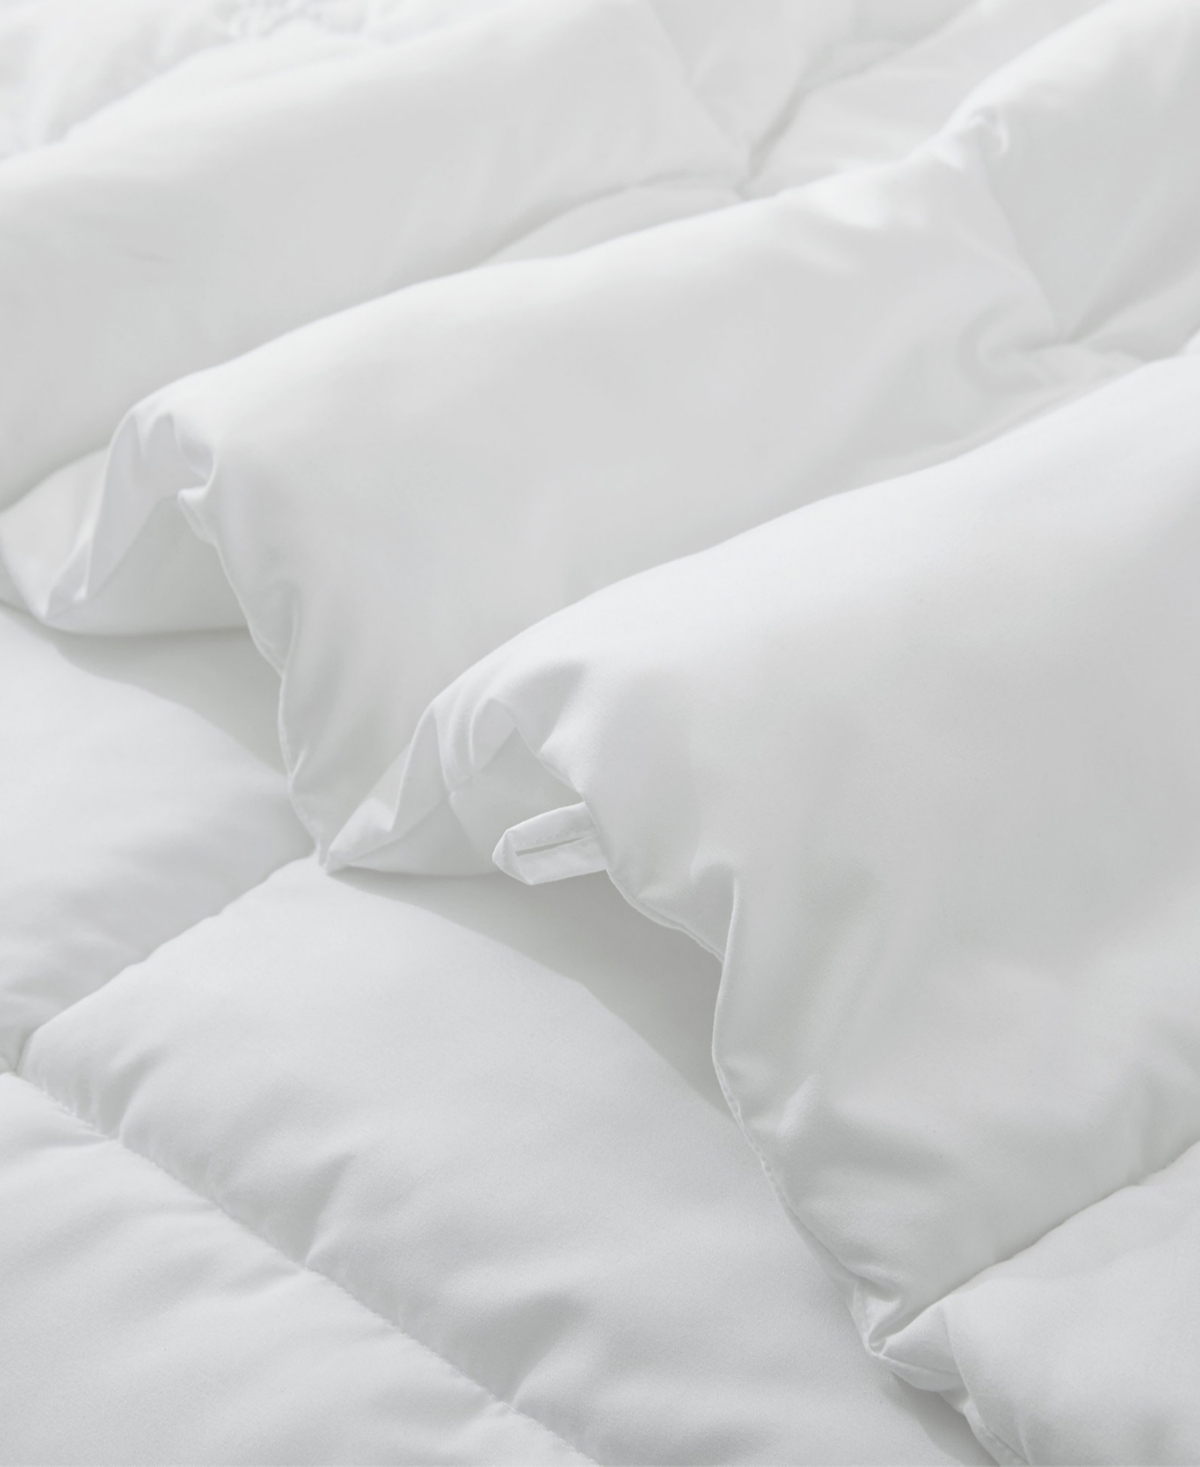 Shop Unikome Light Warmth Reversible Down Alternative Comforter, Twin In White